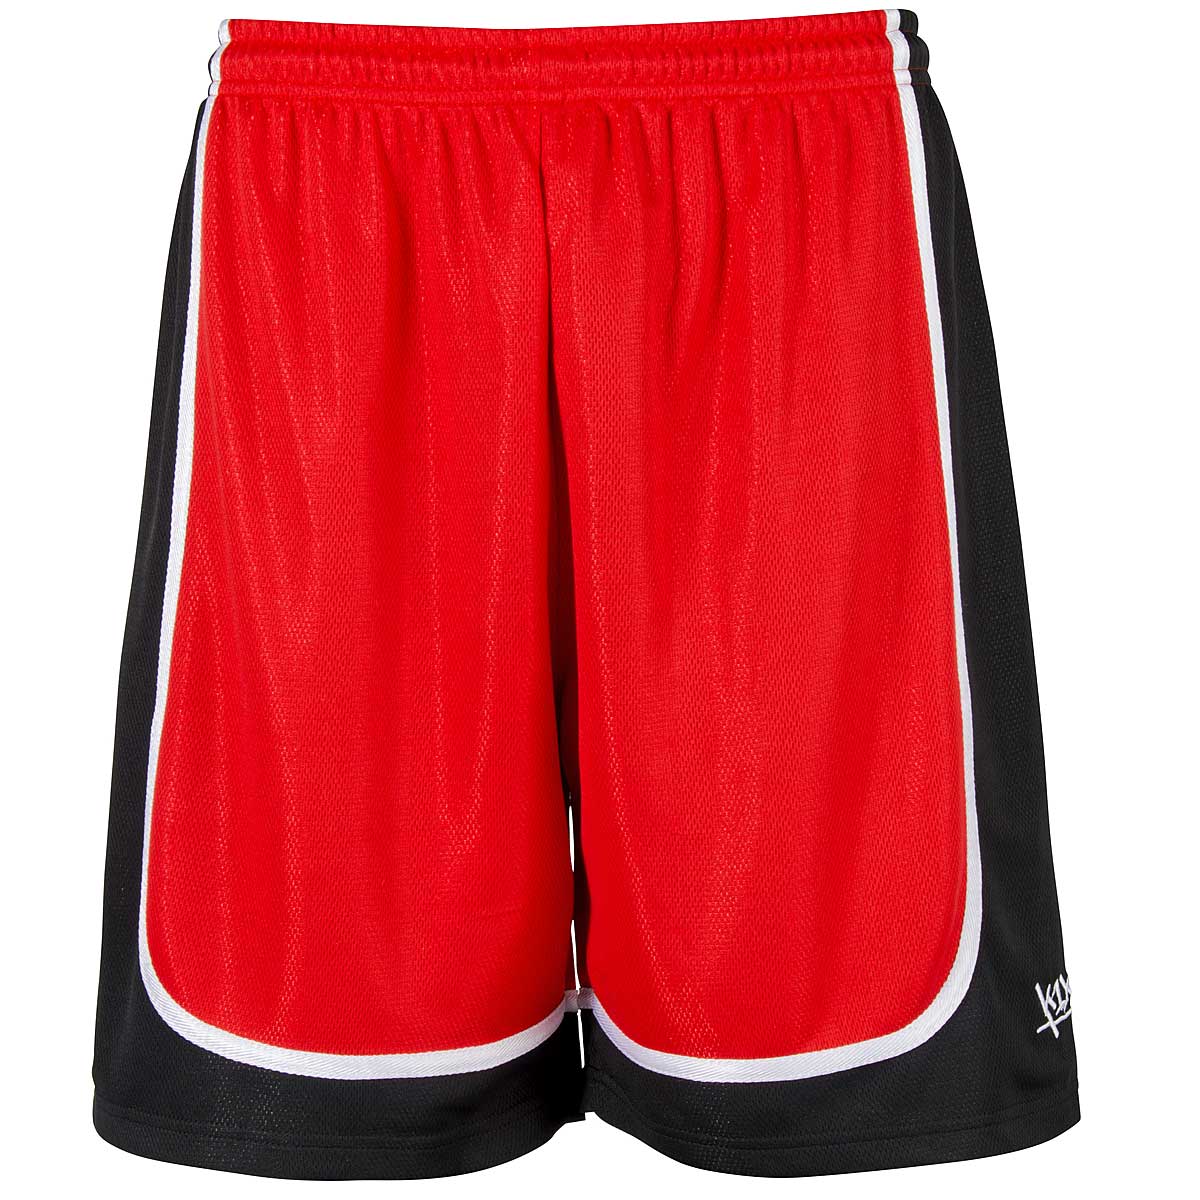 K1X K1X Hardwood League Uniform Shorts Mk2, Red/Black/White